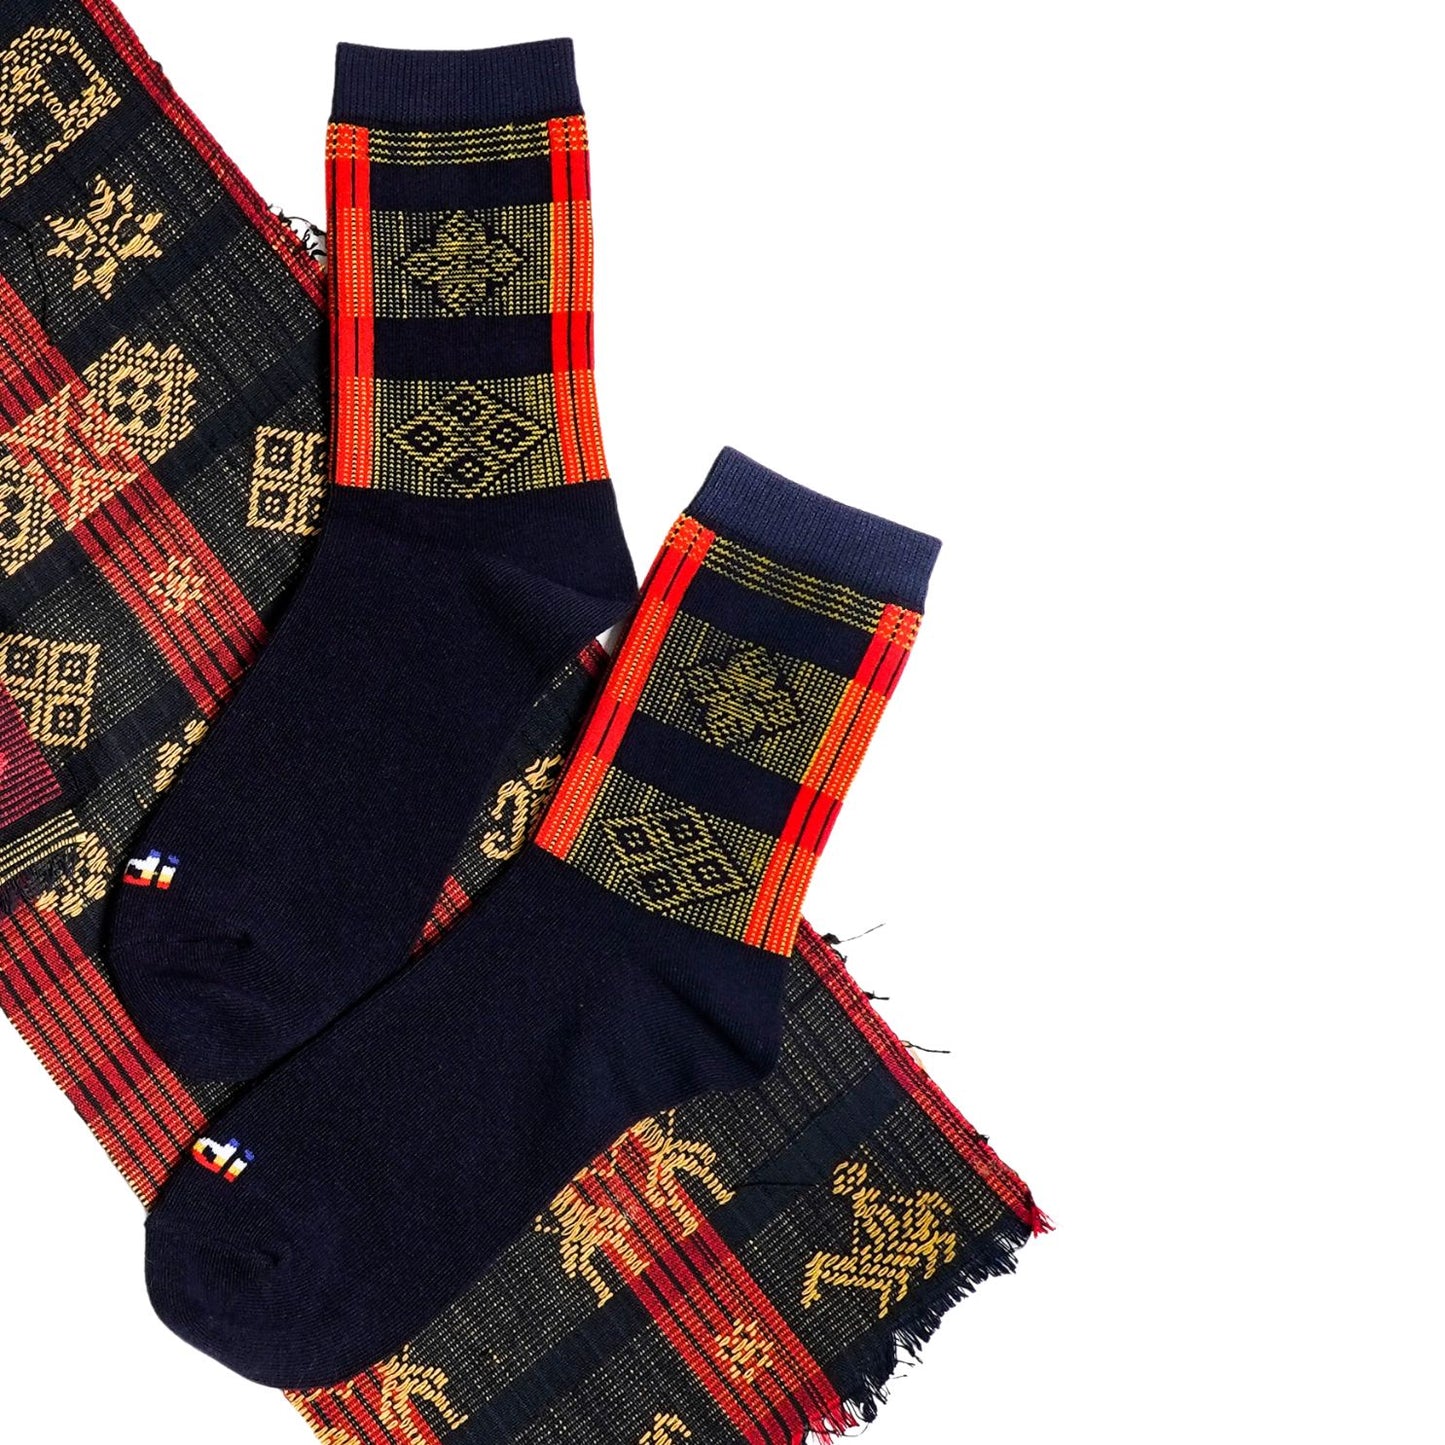 Pinilian (Kabunian) - INDI Heritage Socks (Adult)